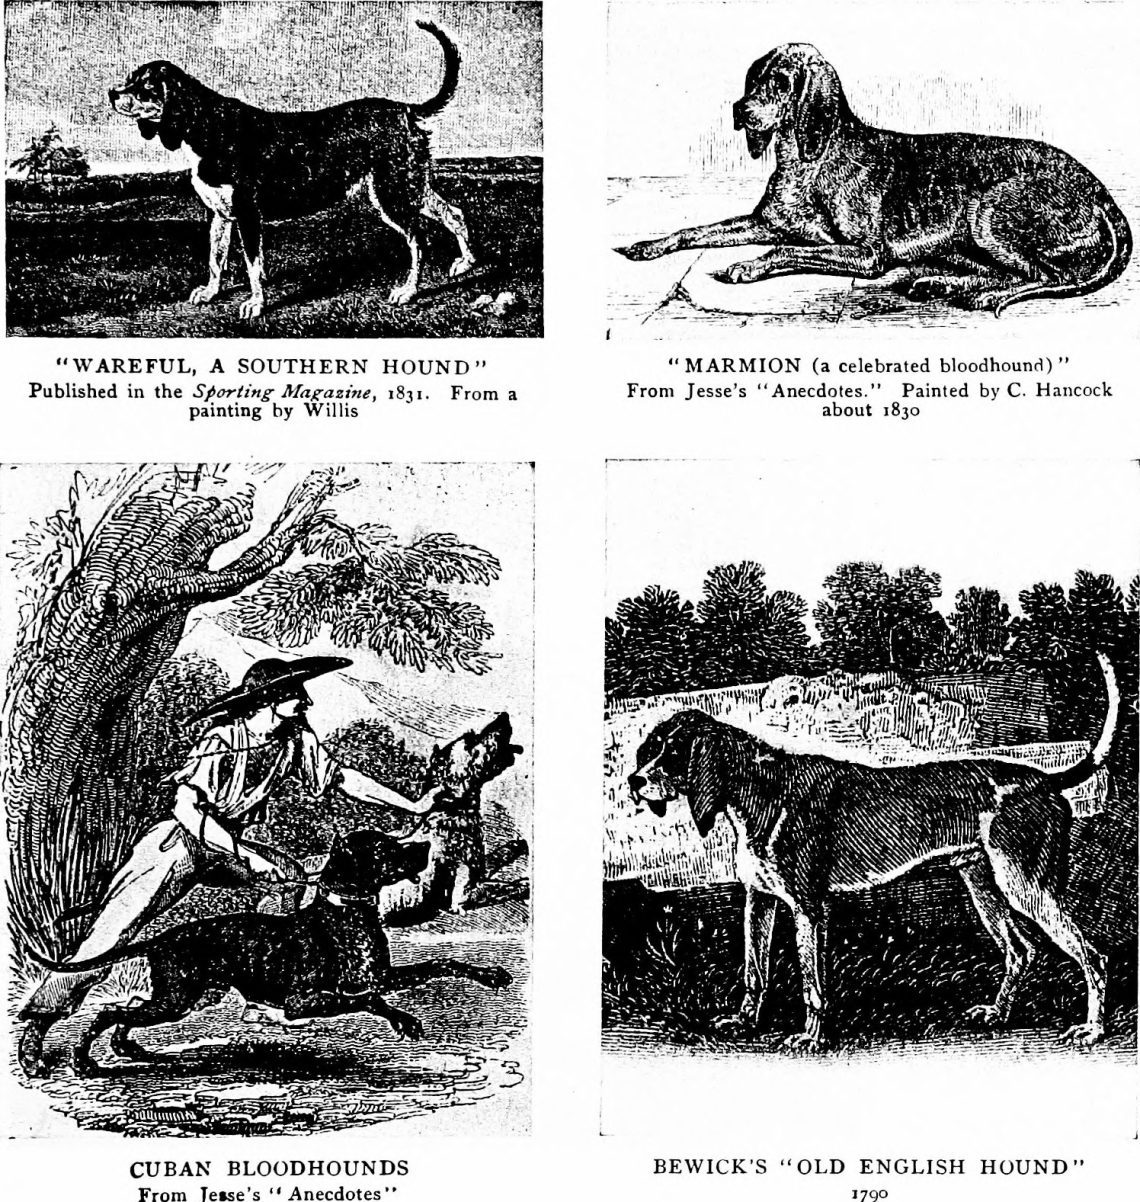 Detailed interpretation of the exhibition descriptions of the dog